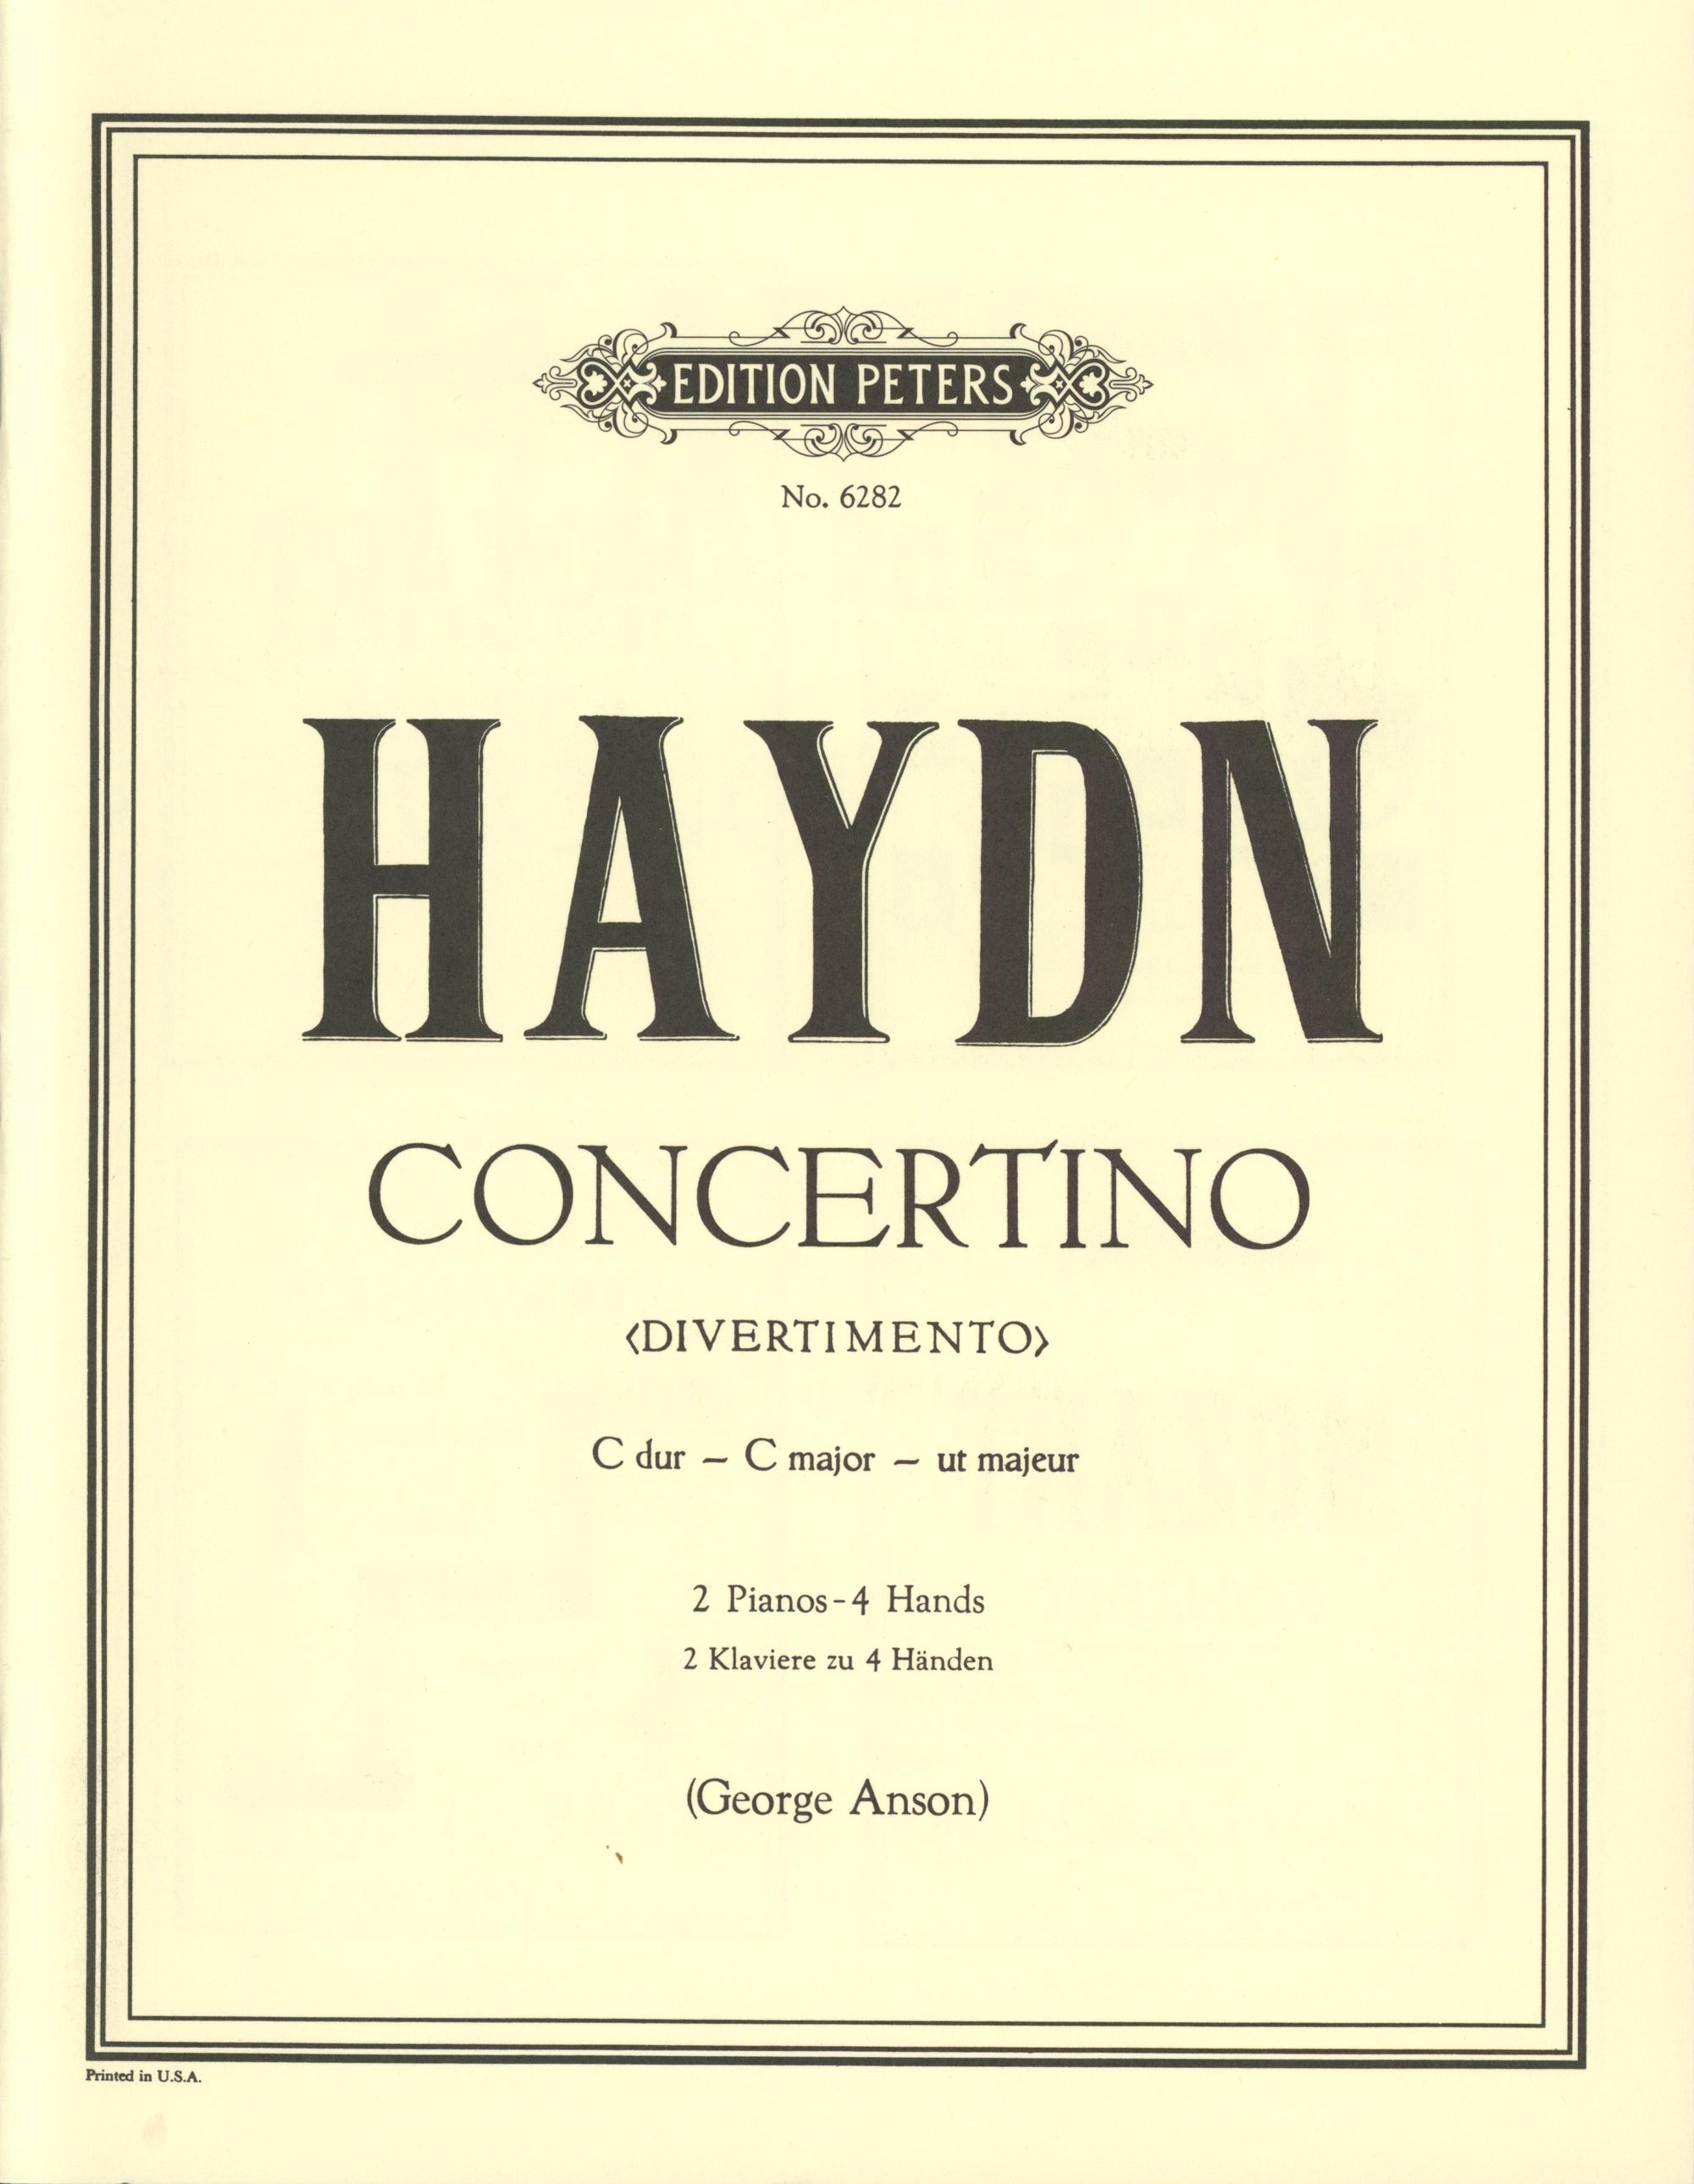 Haydn: Concertino (Divertimento) in C Major, Hob. XIV:3 (arr. for 2 pianos)